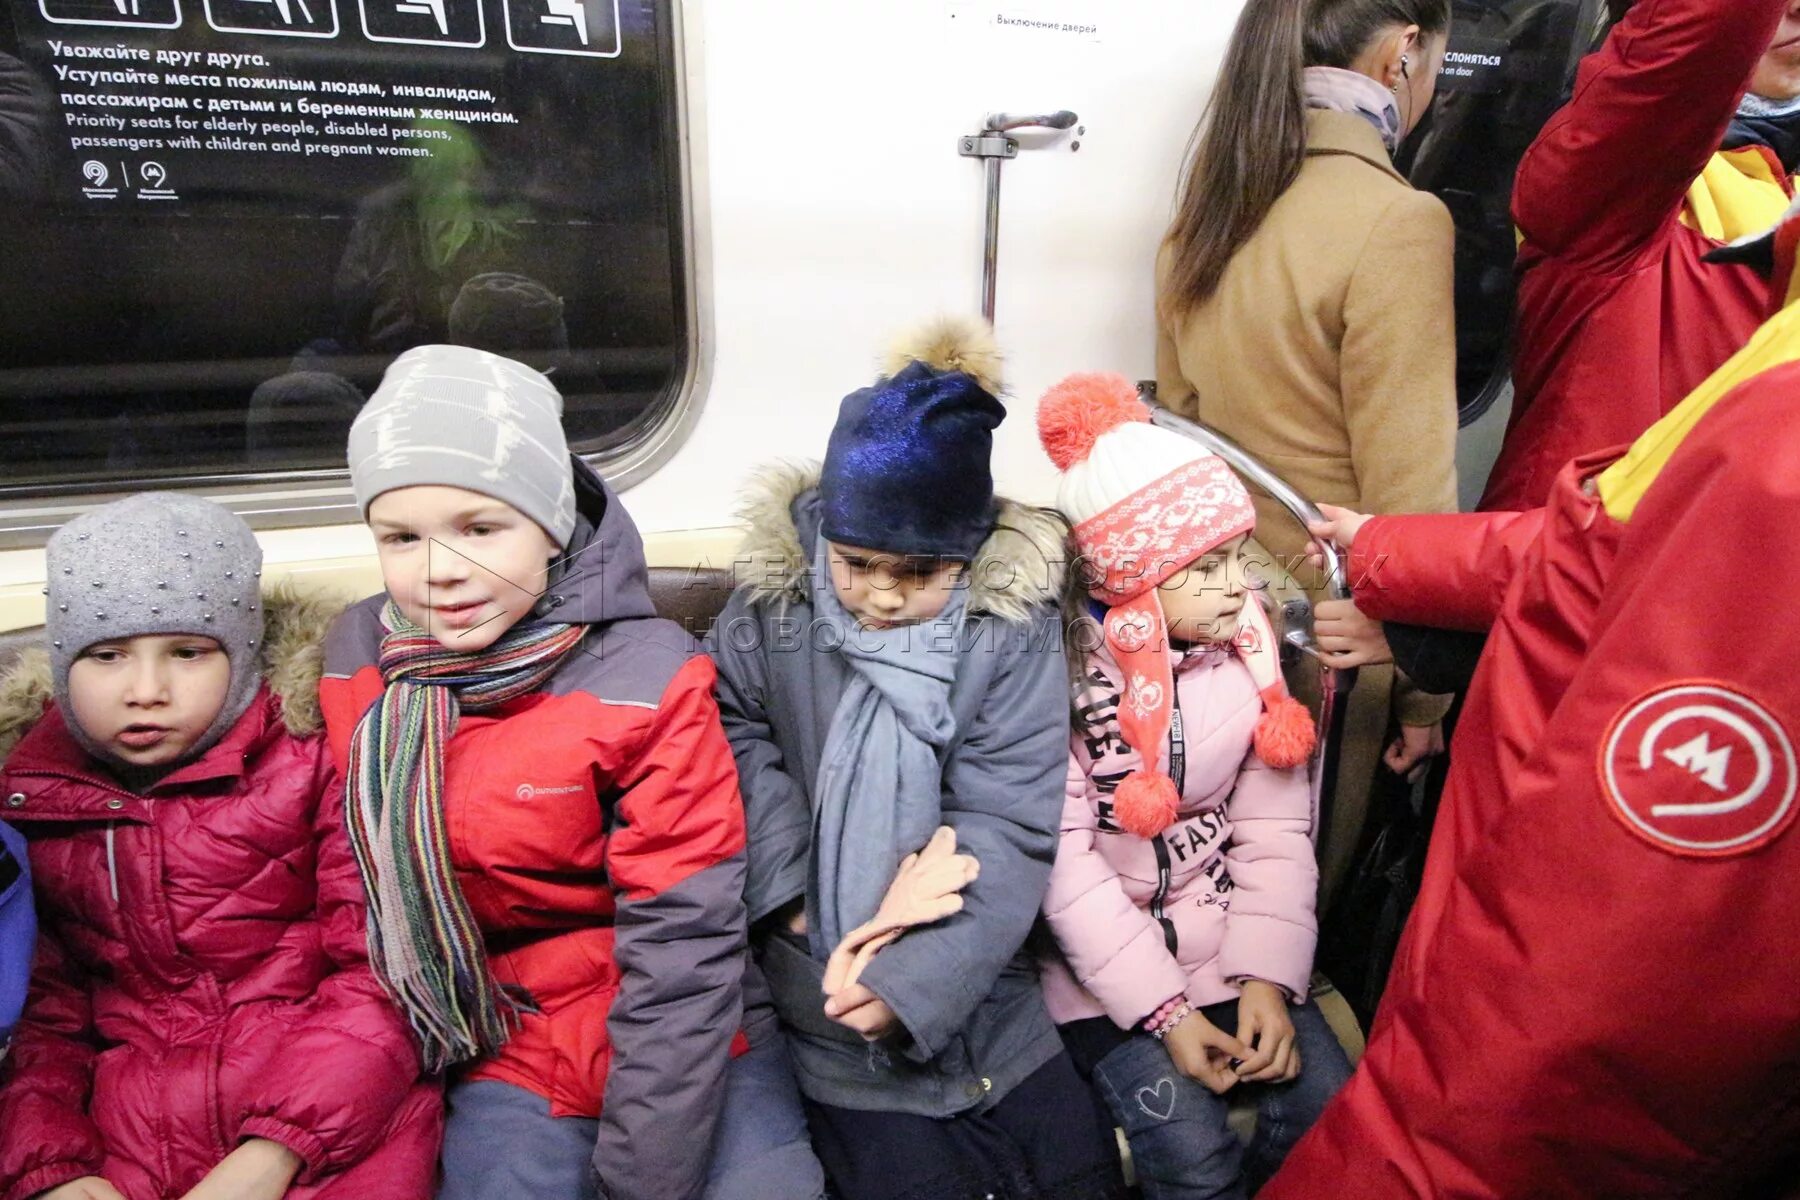 Метро для детей. Дети в метро Москва. Школьники в метро. Ребенок один в метро. Метрополитен дети